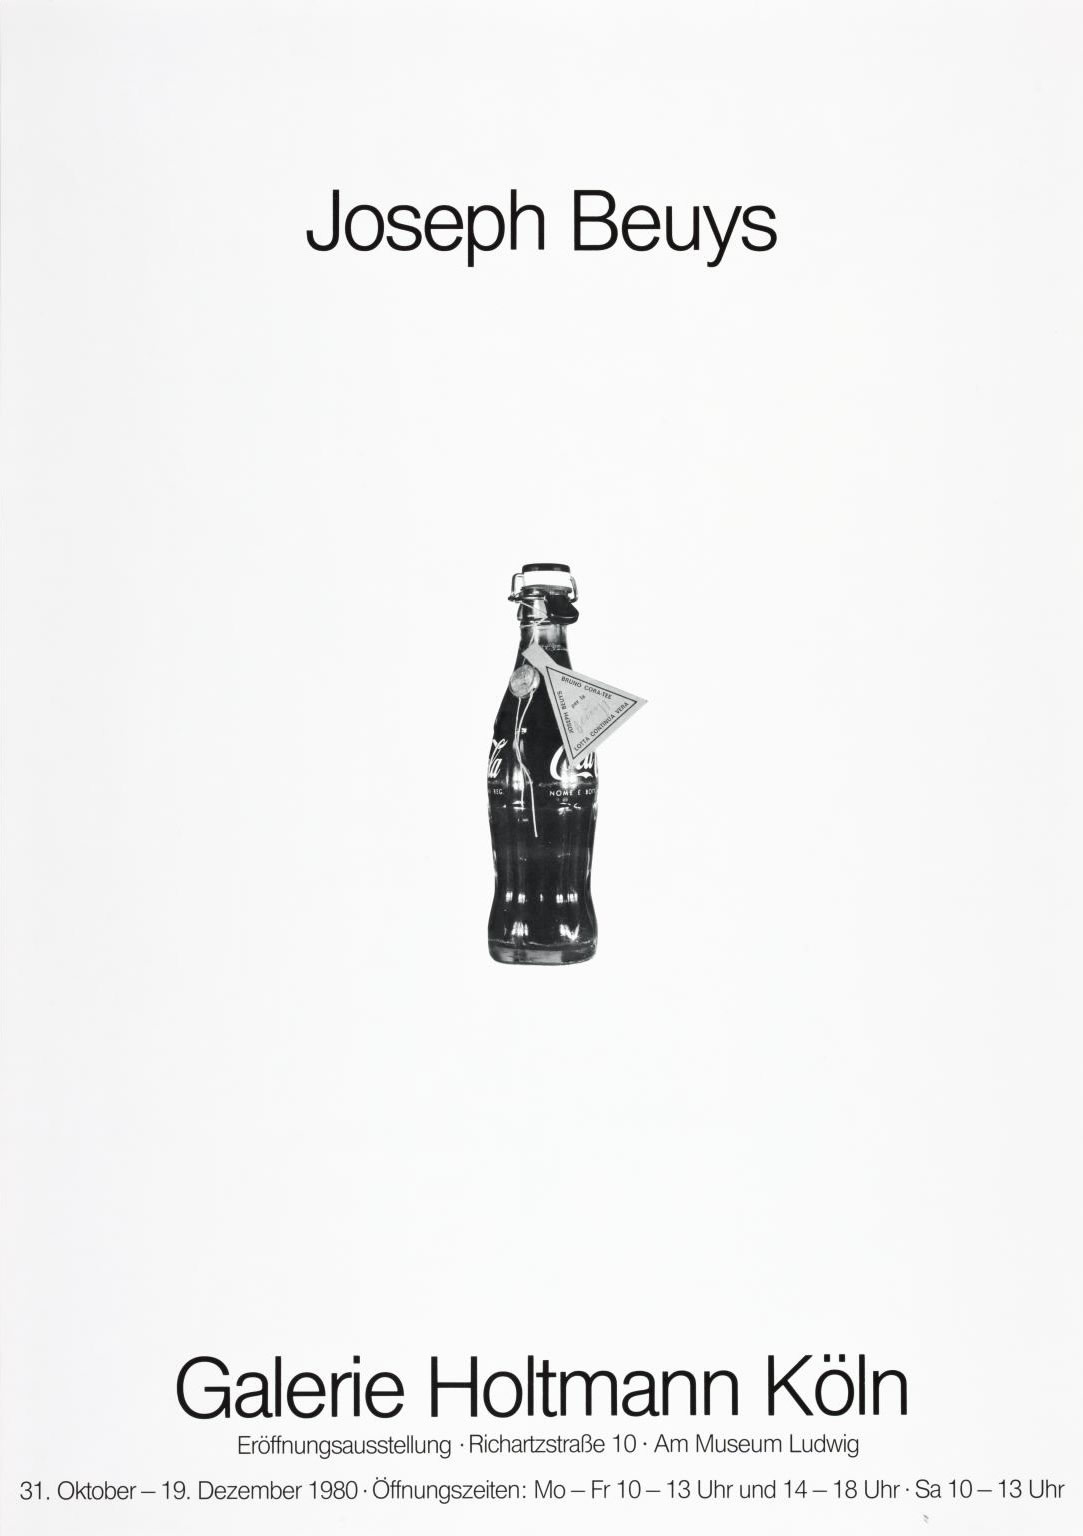 Joseph Beuys: Galeria Holtmann, Koln. 1980